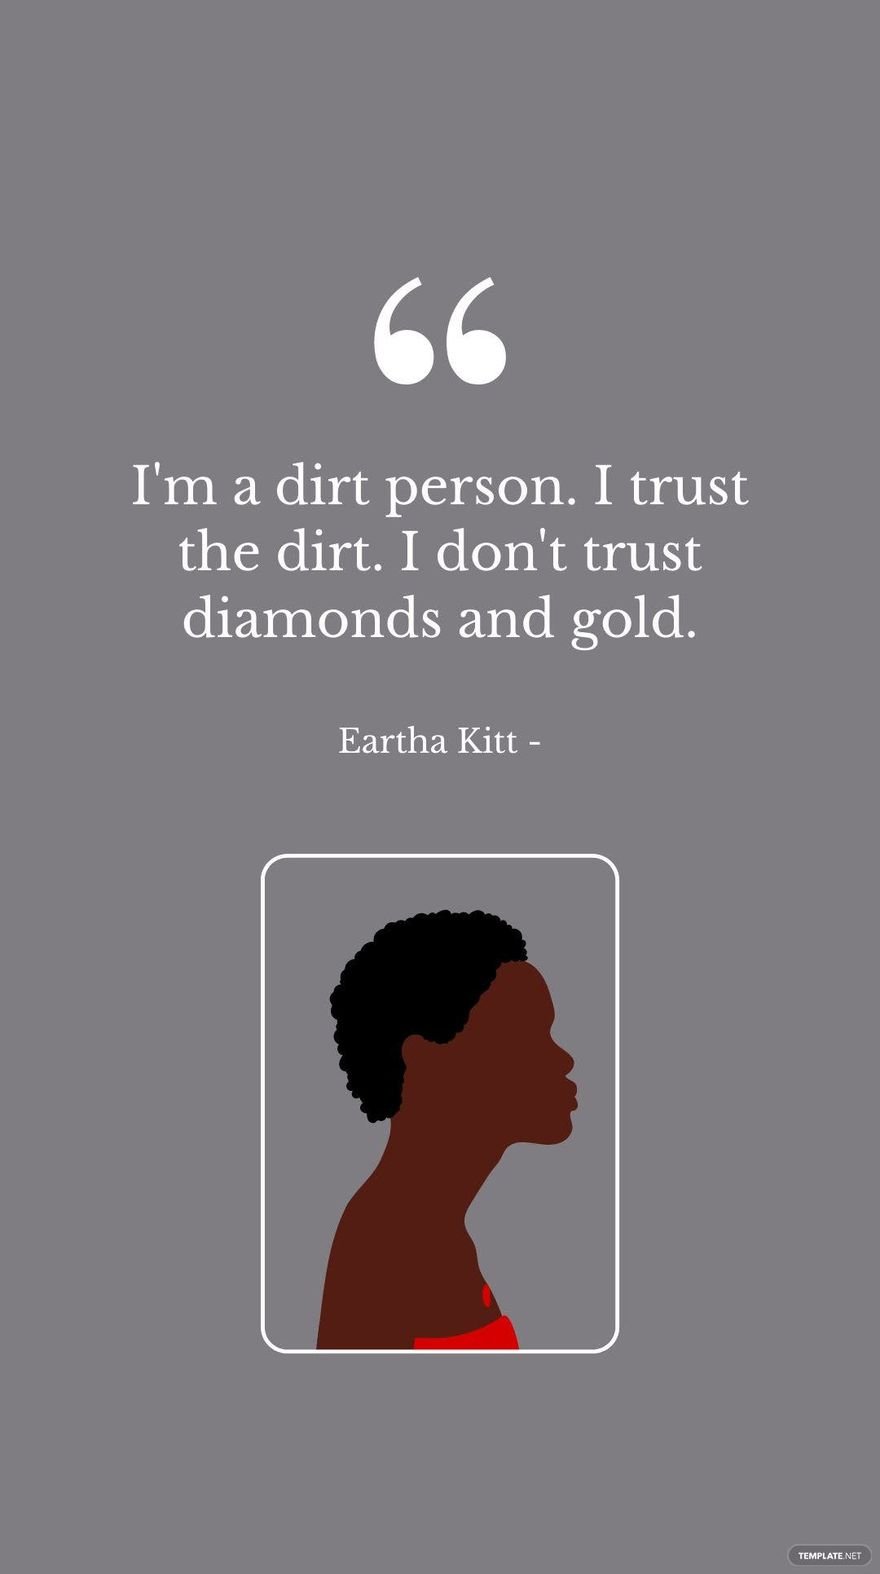 Free Eartha Kitt - I'm a dirt person. I trust the dirt. I don't trust diamonds and gold. in JPG